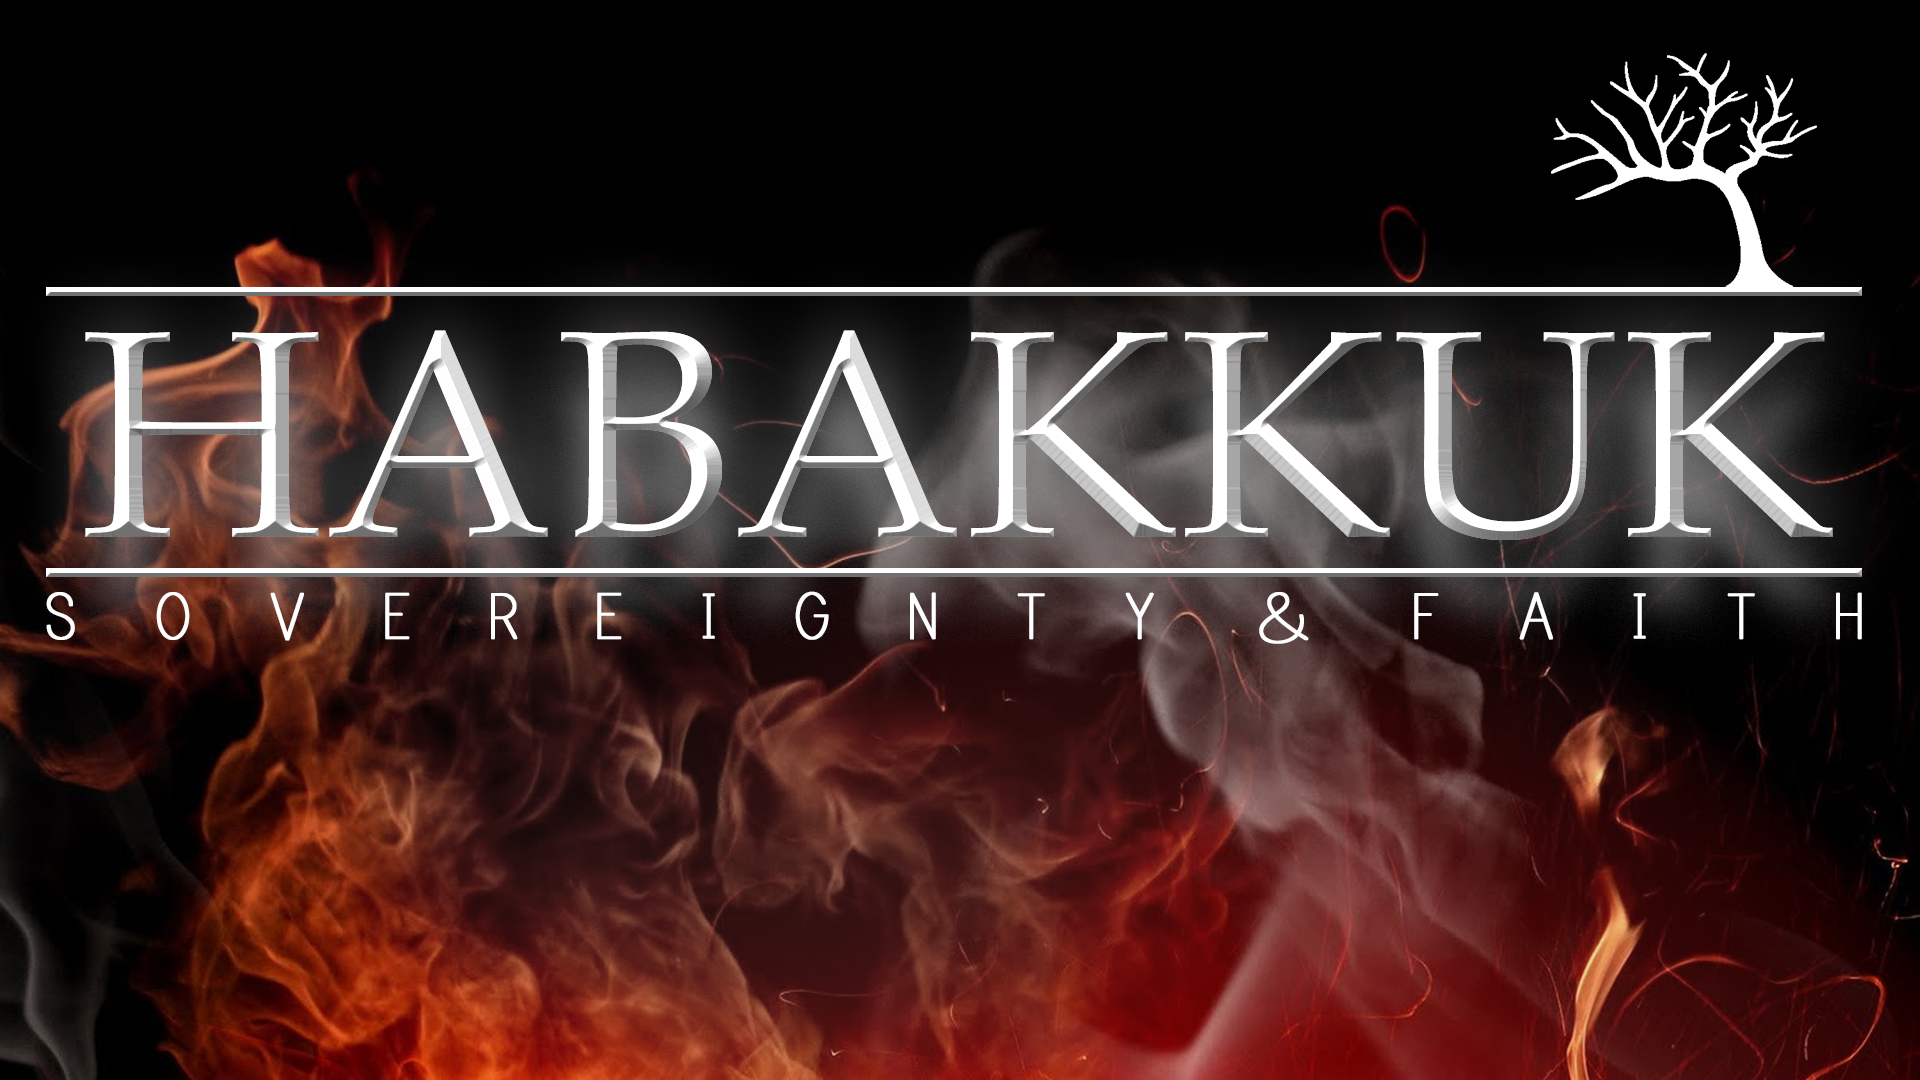 Habakkuk Intro